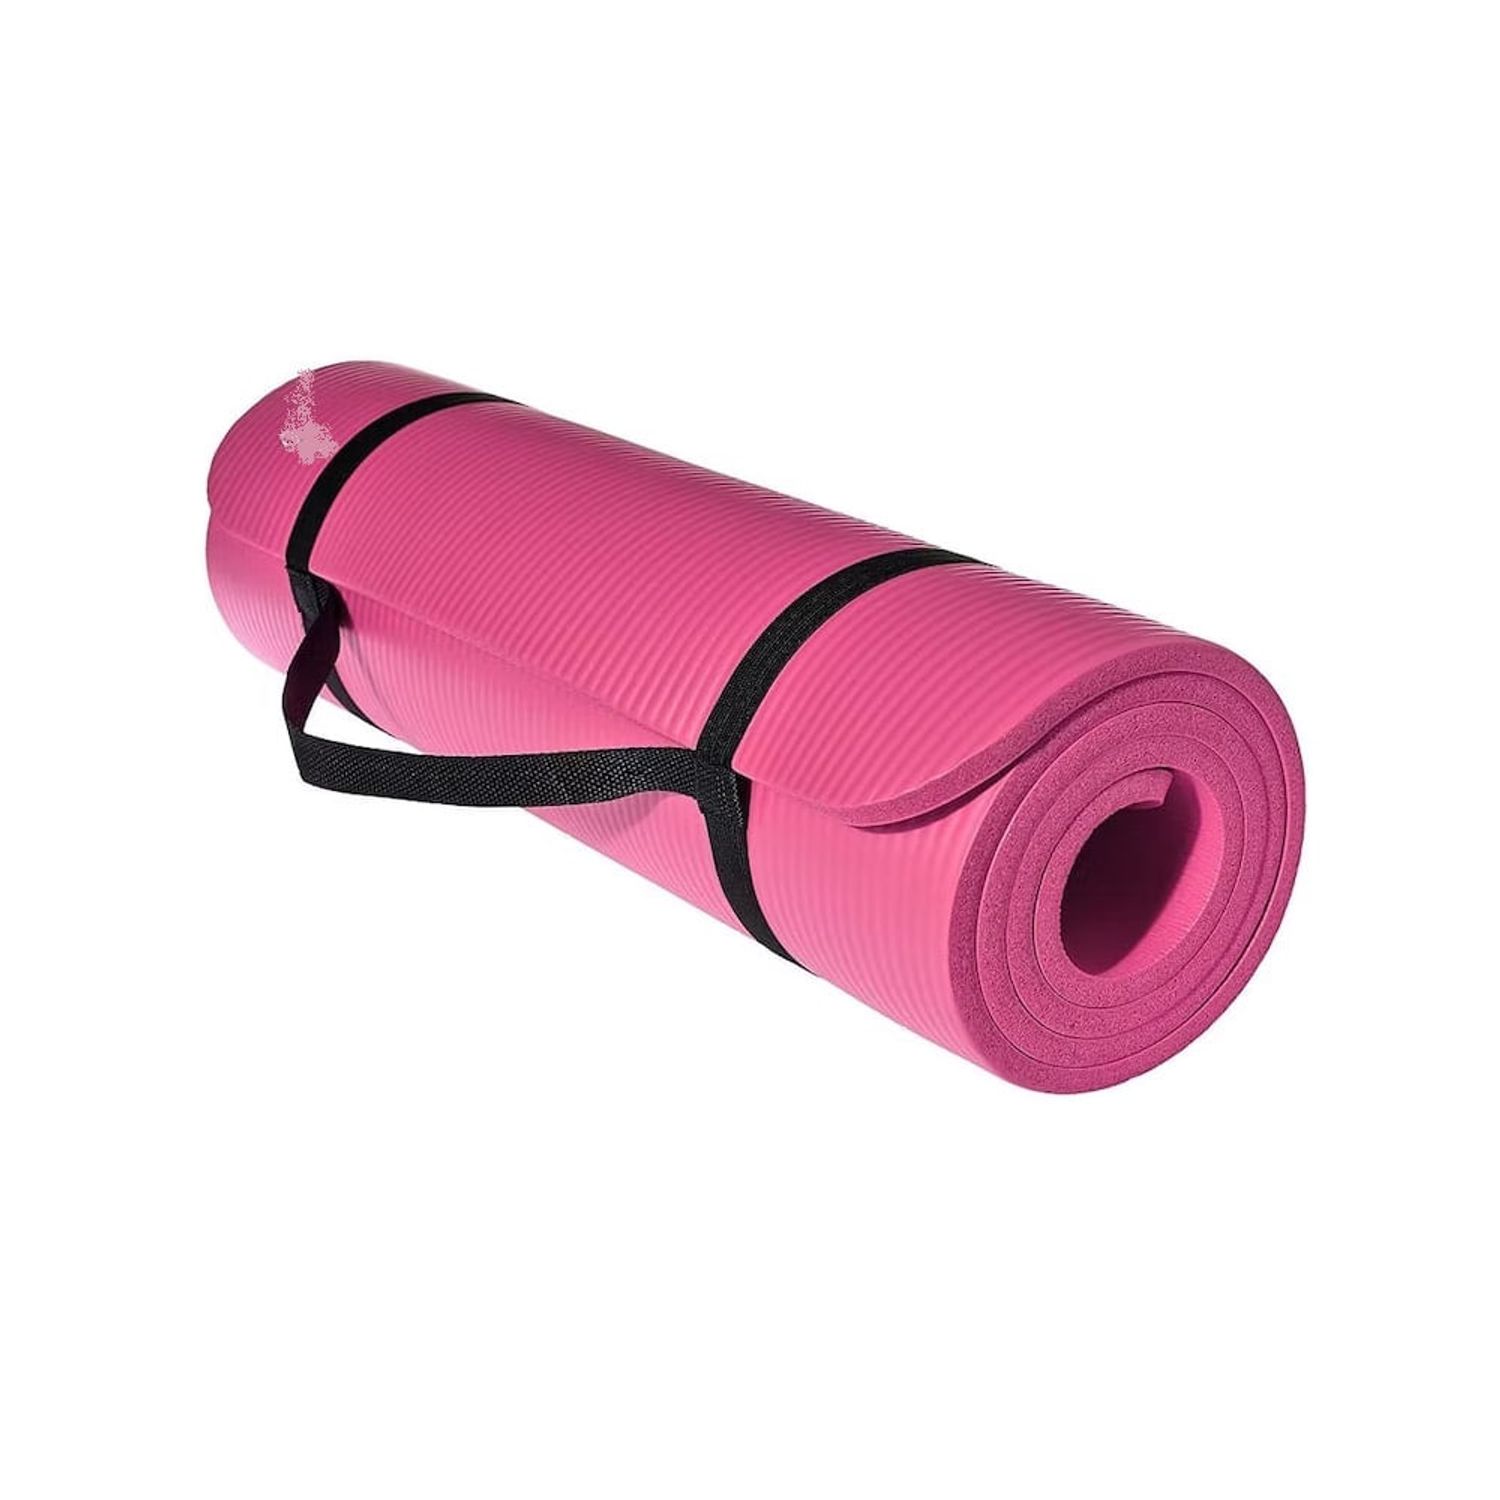 Mat de Yoga Pilates 10 mm con Elástico Portátil-Rosado